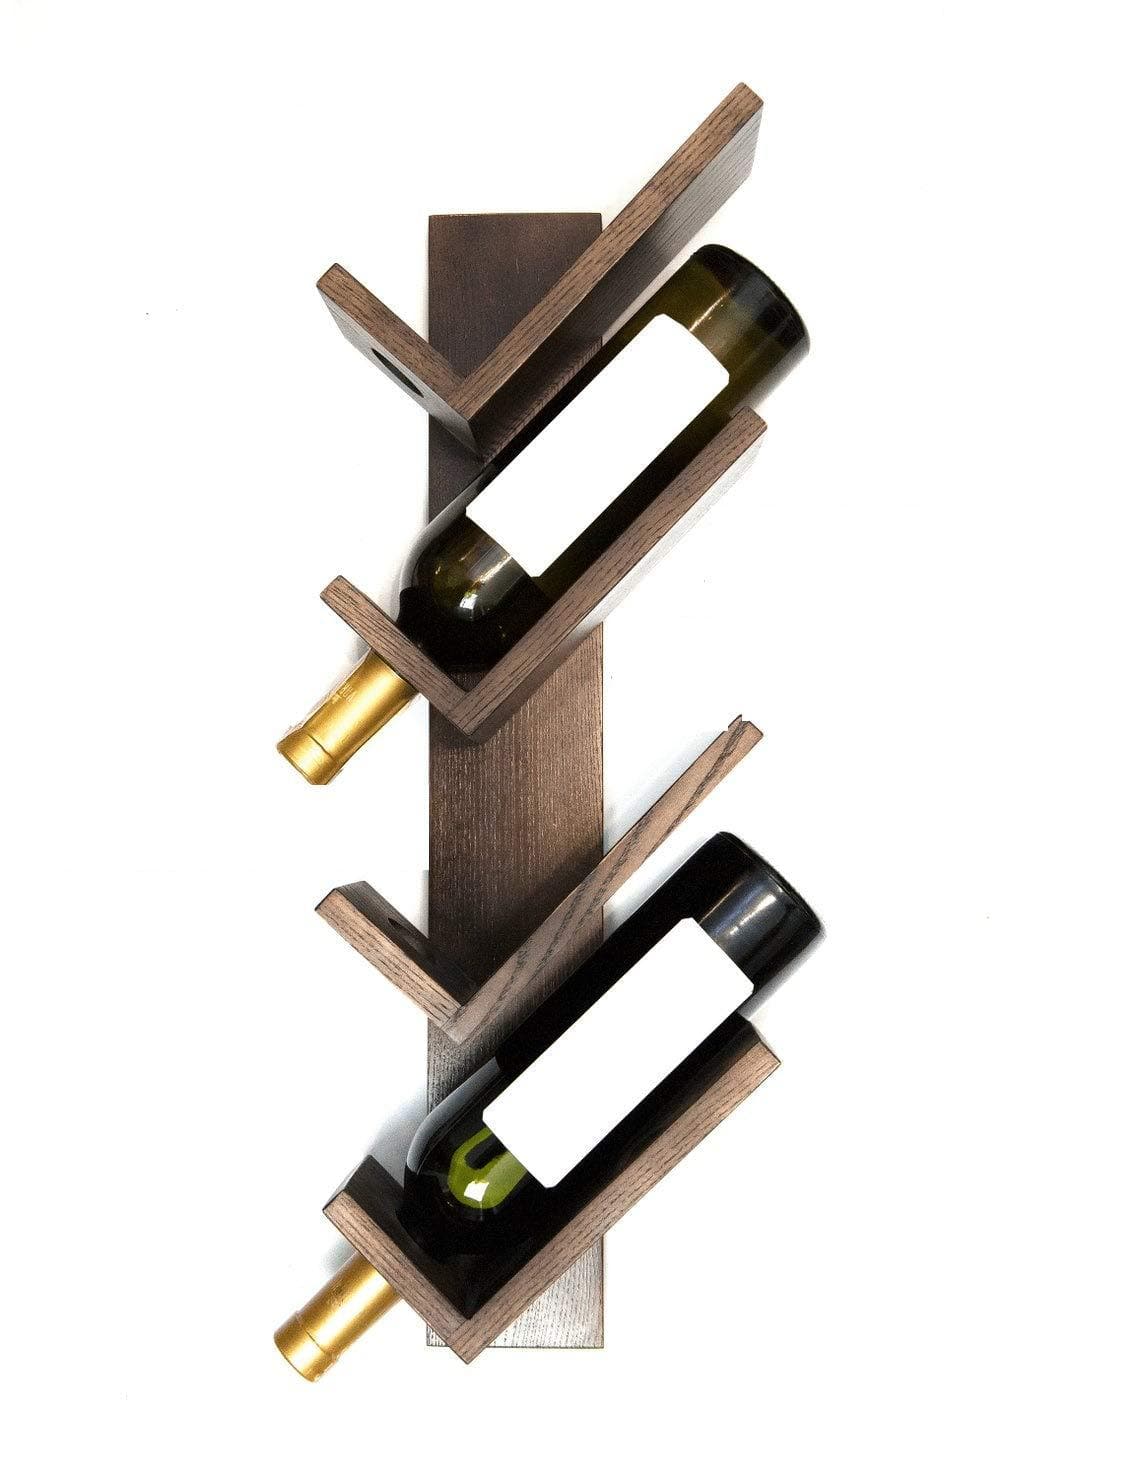 4 Bottle Wooden Wine Bottle Holder Rack, Wall Mount Wine Rack, Beer Holder